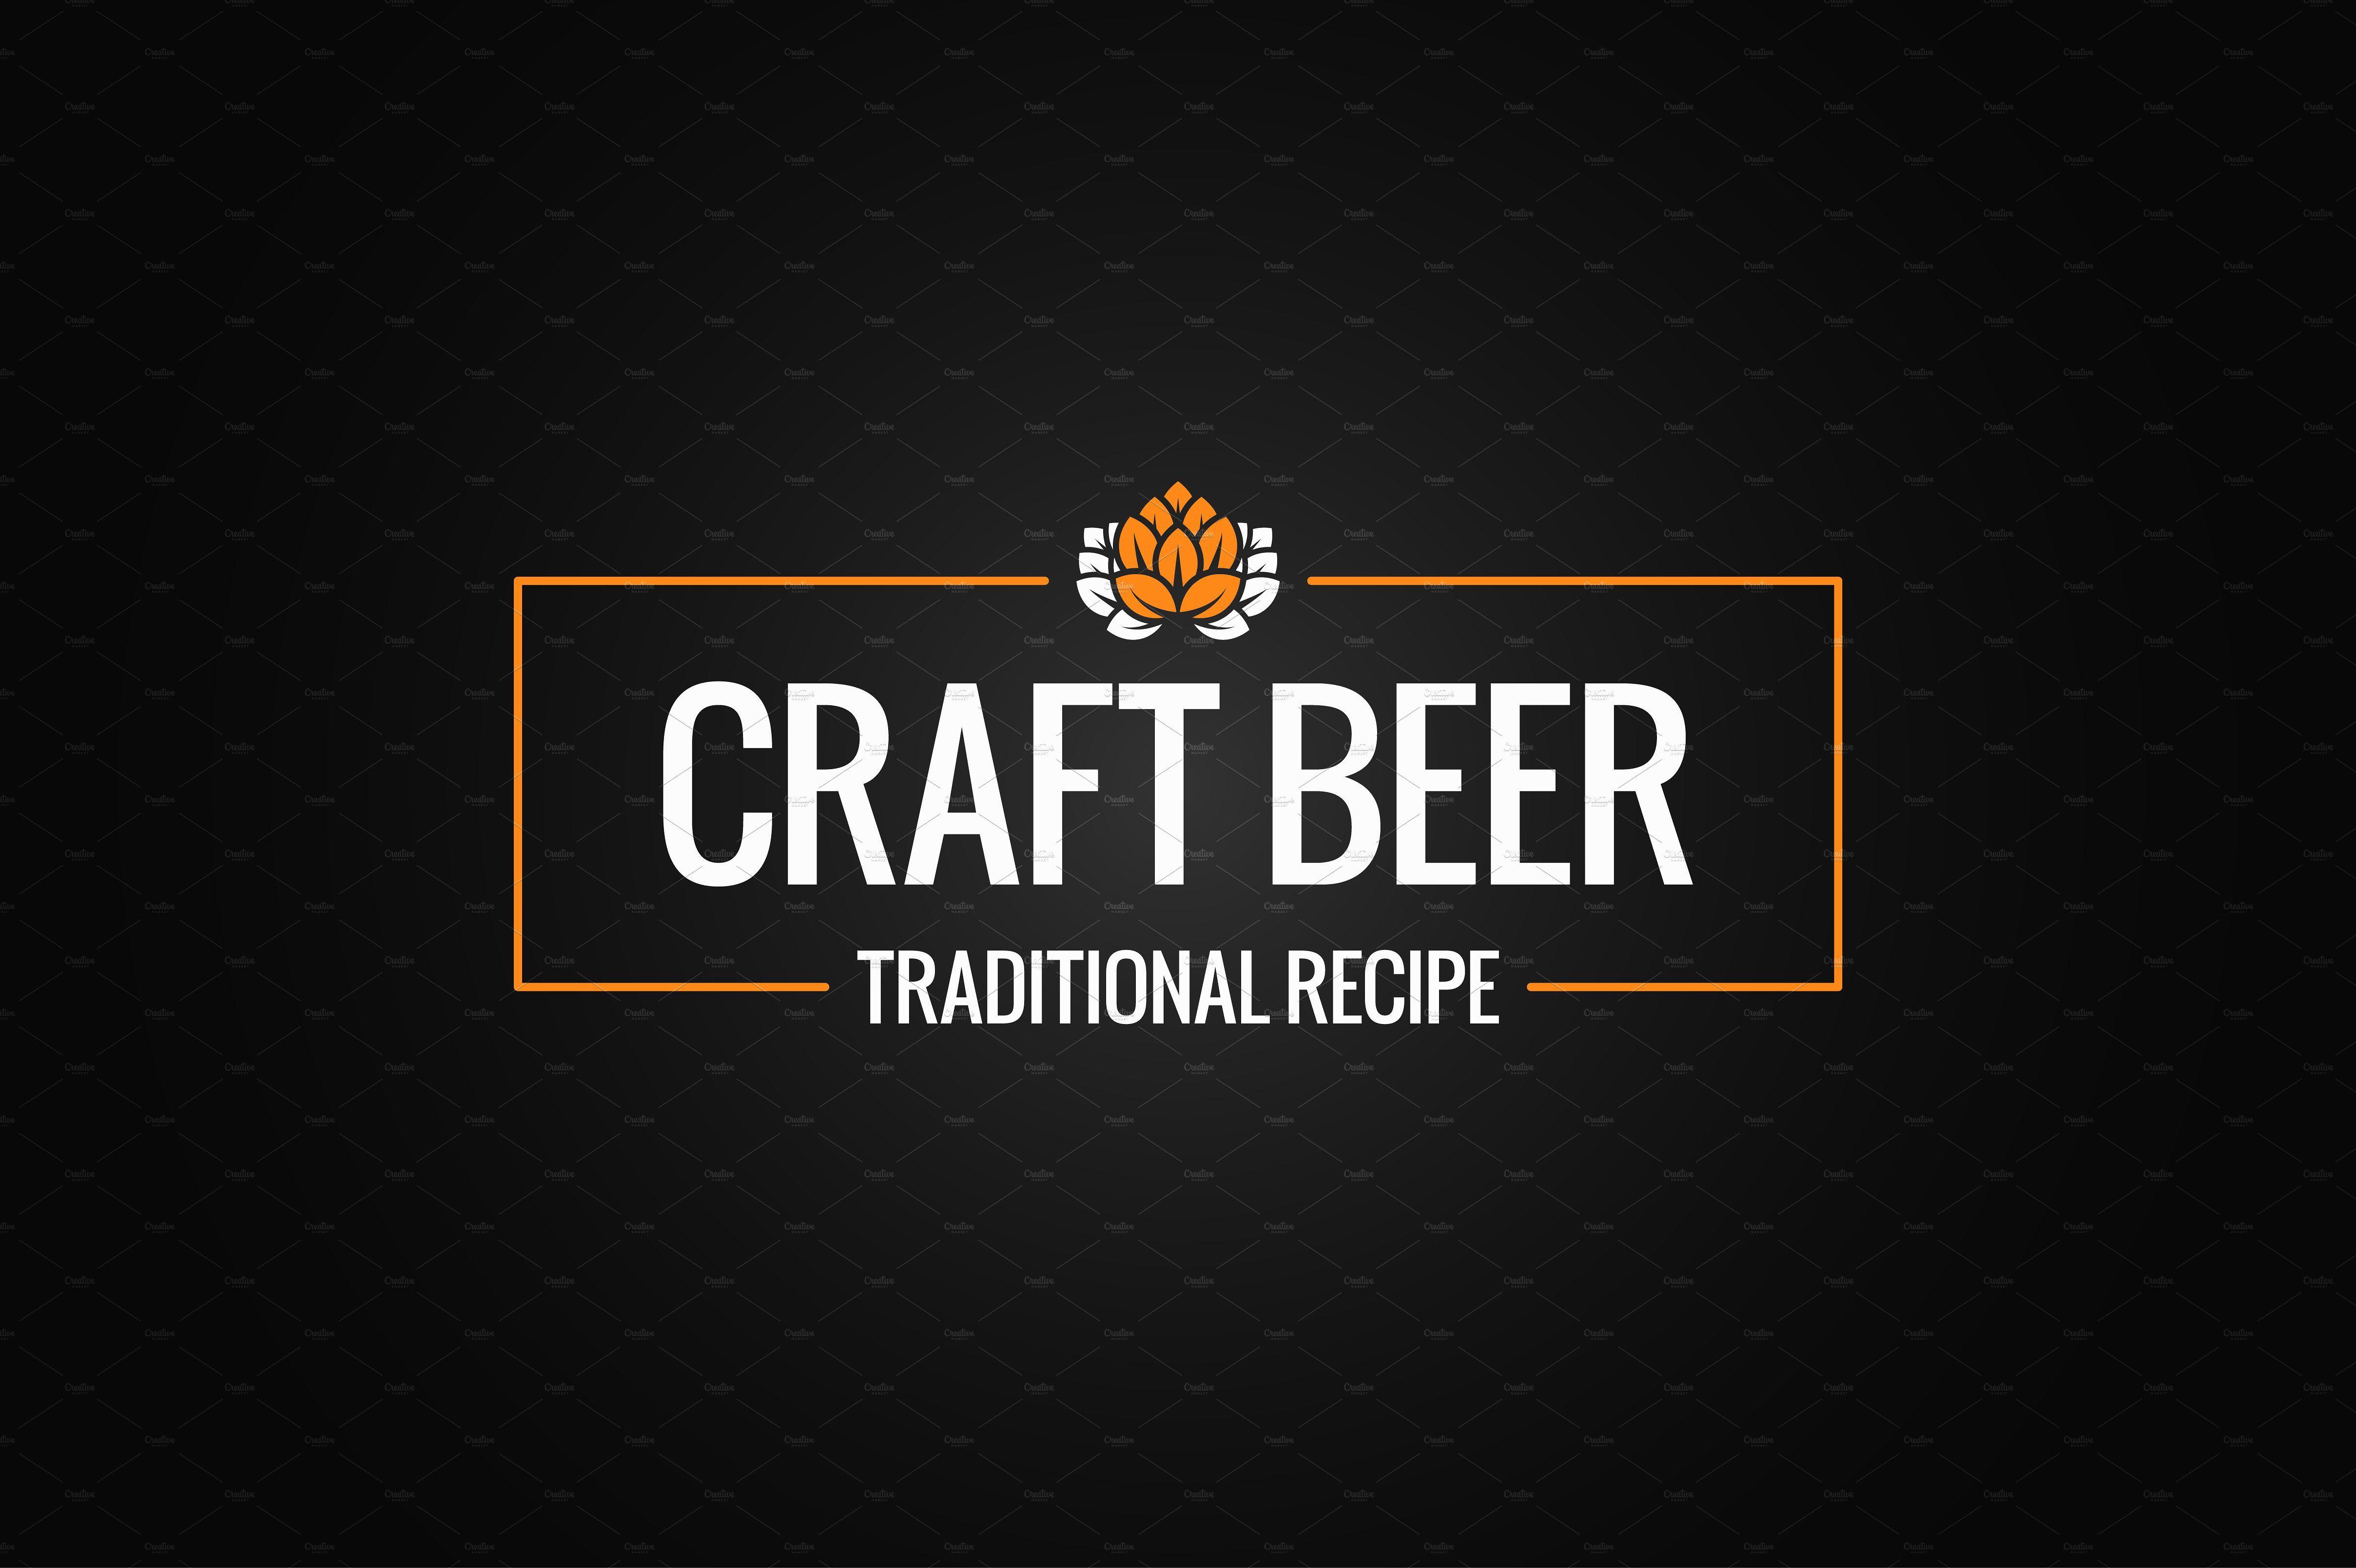 Craft Beer Logo - craft beer logo design background Logo Templates Creative Market